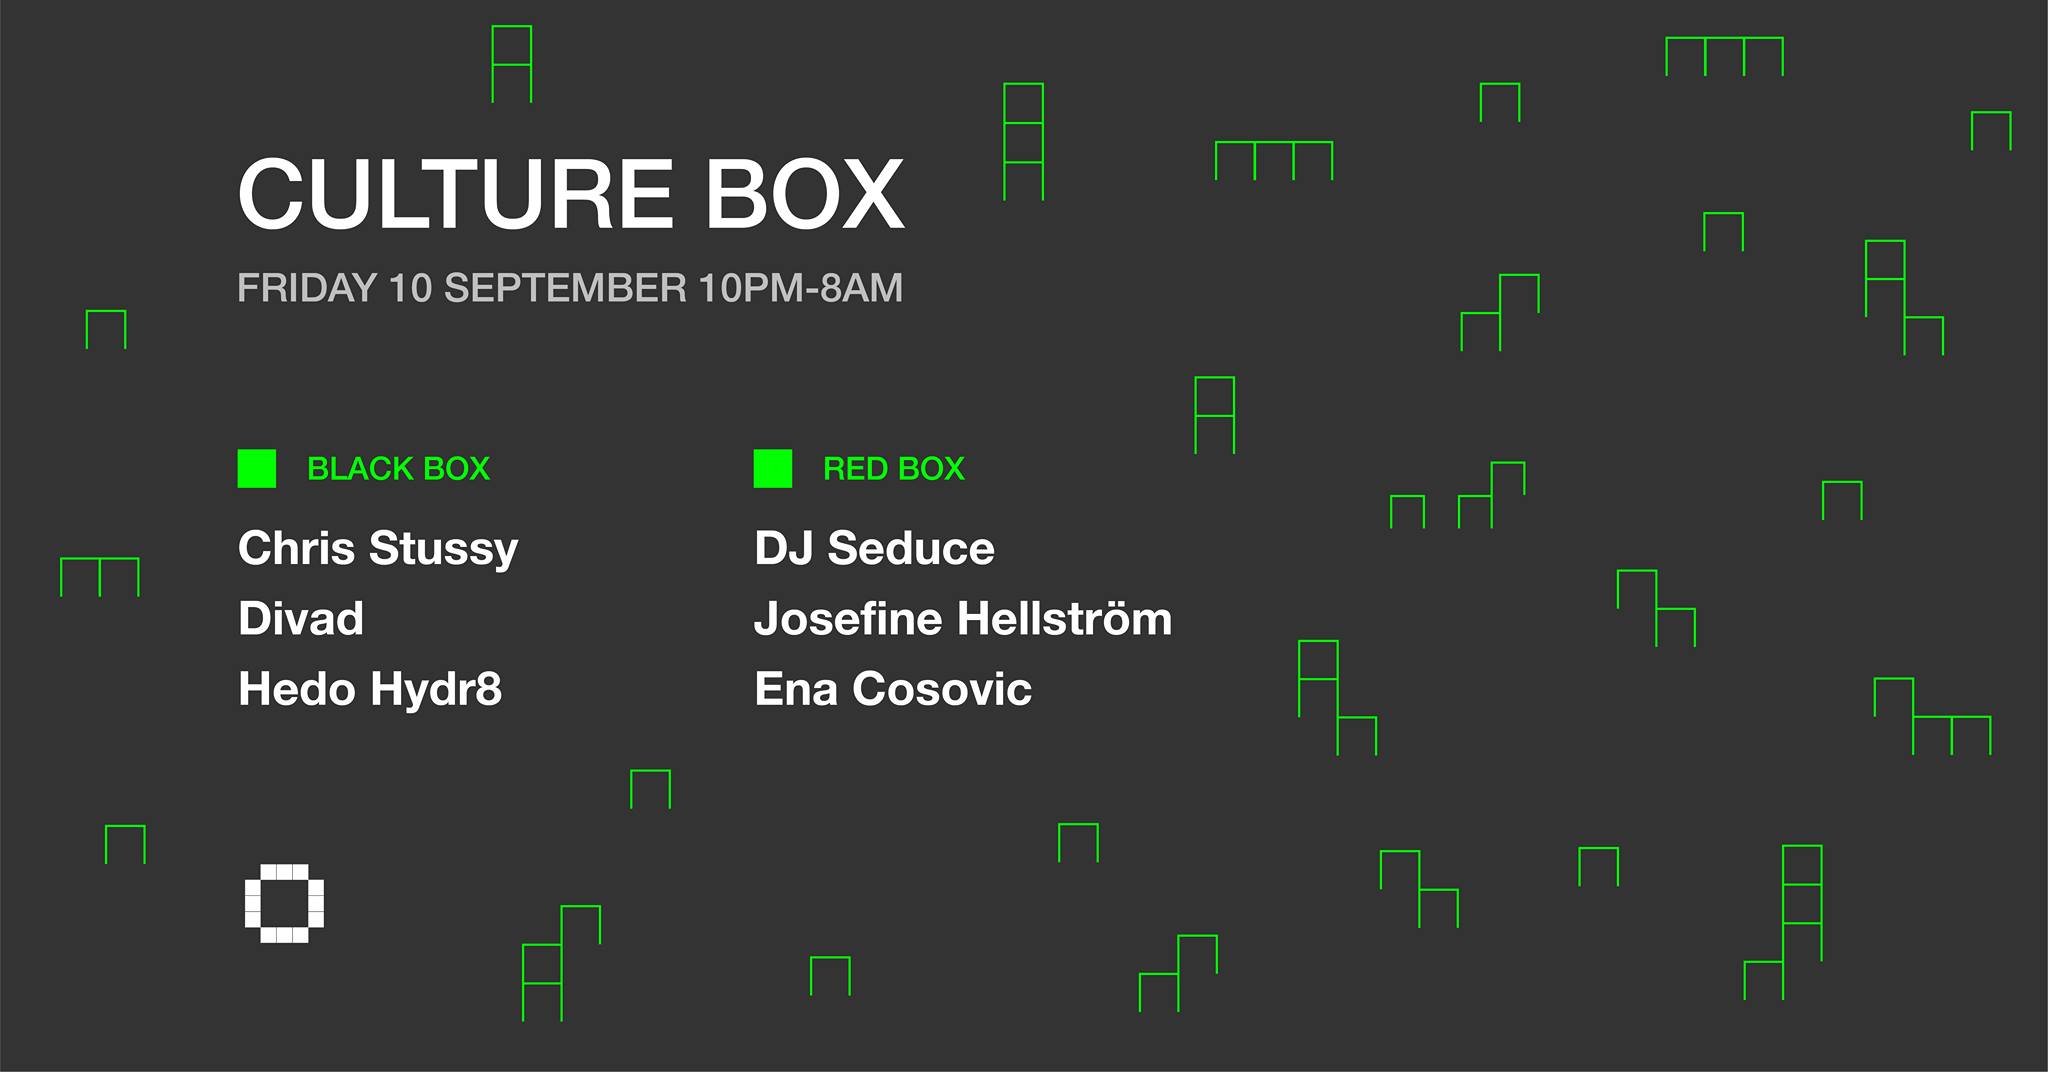 Culture Box Friday 10.09.2021 - Chris Stussy / Divad / Hedo Hydr8 / DJ Seduce / Josefine Hellström / Ena Cosovic